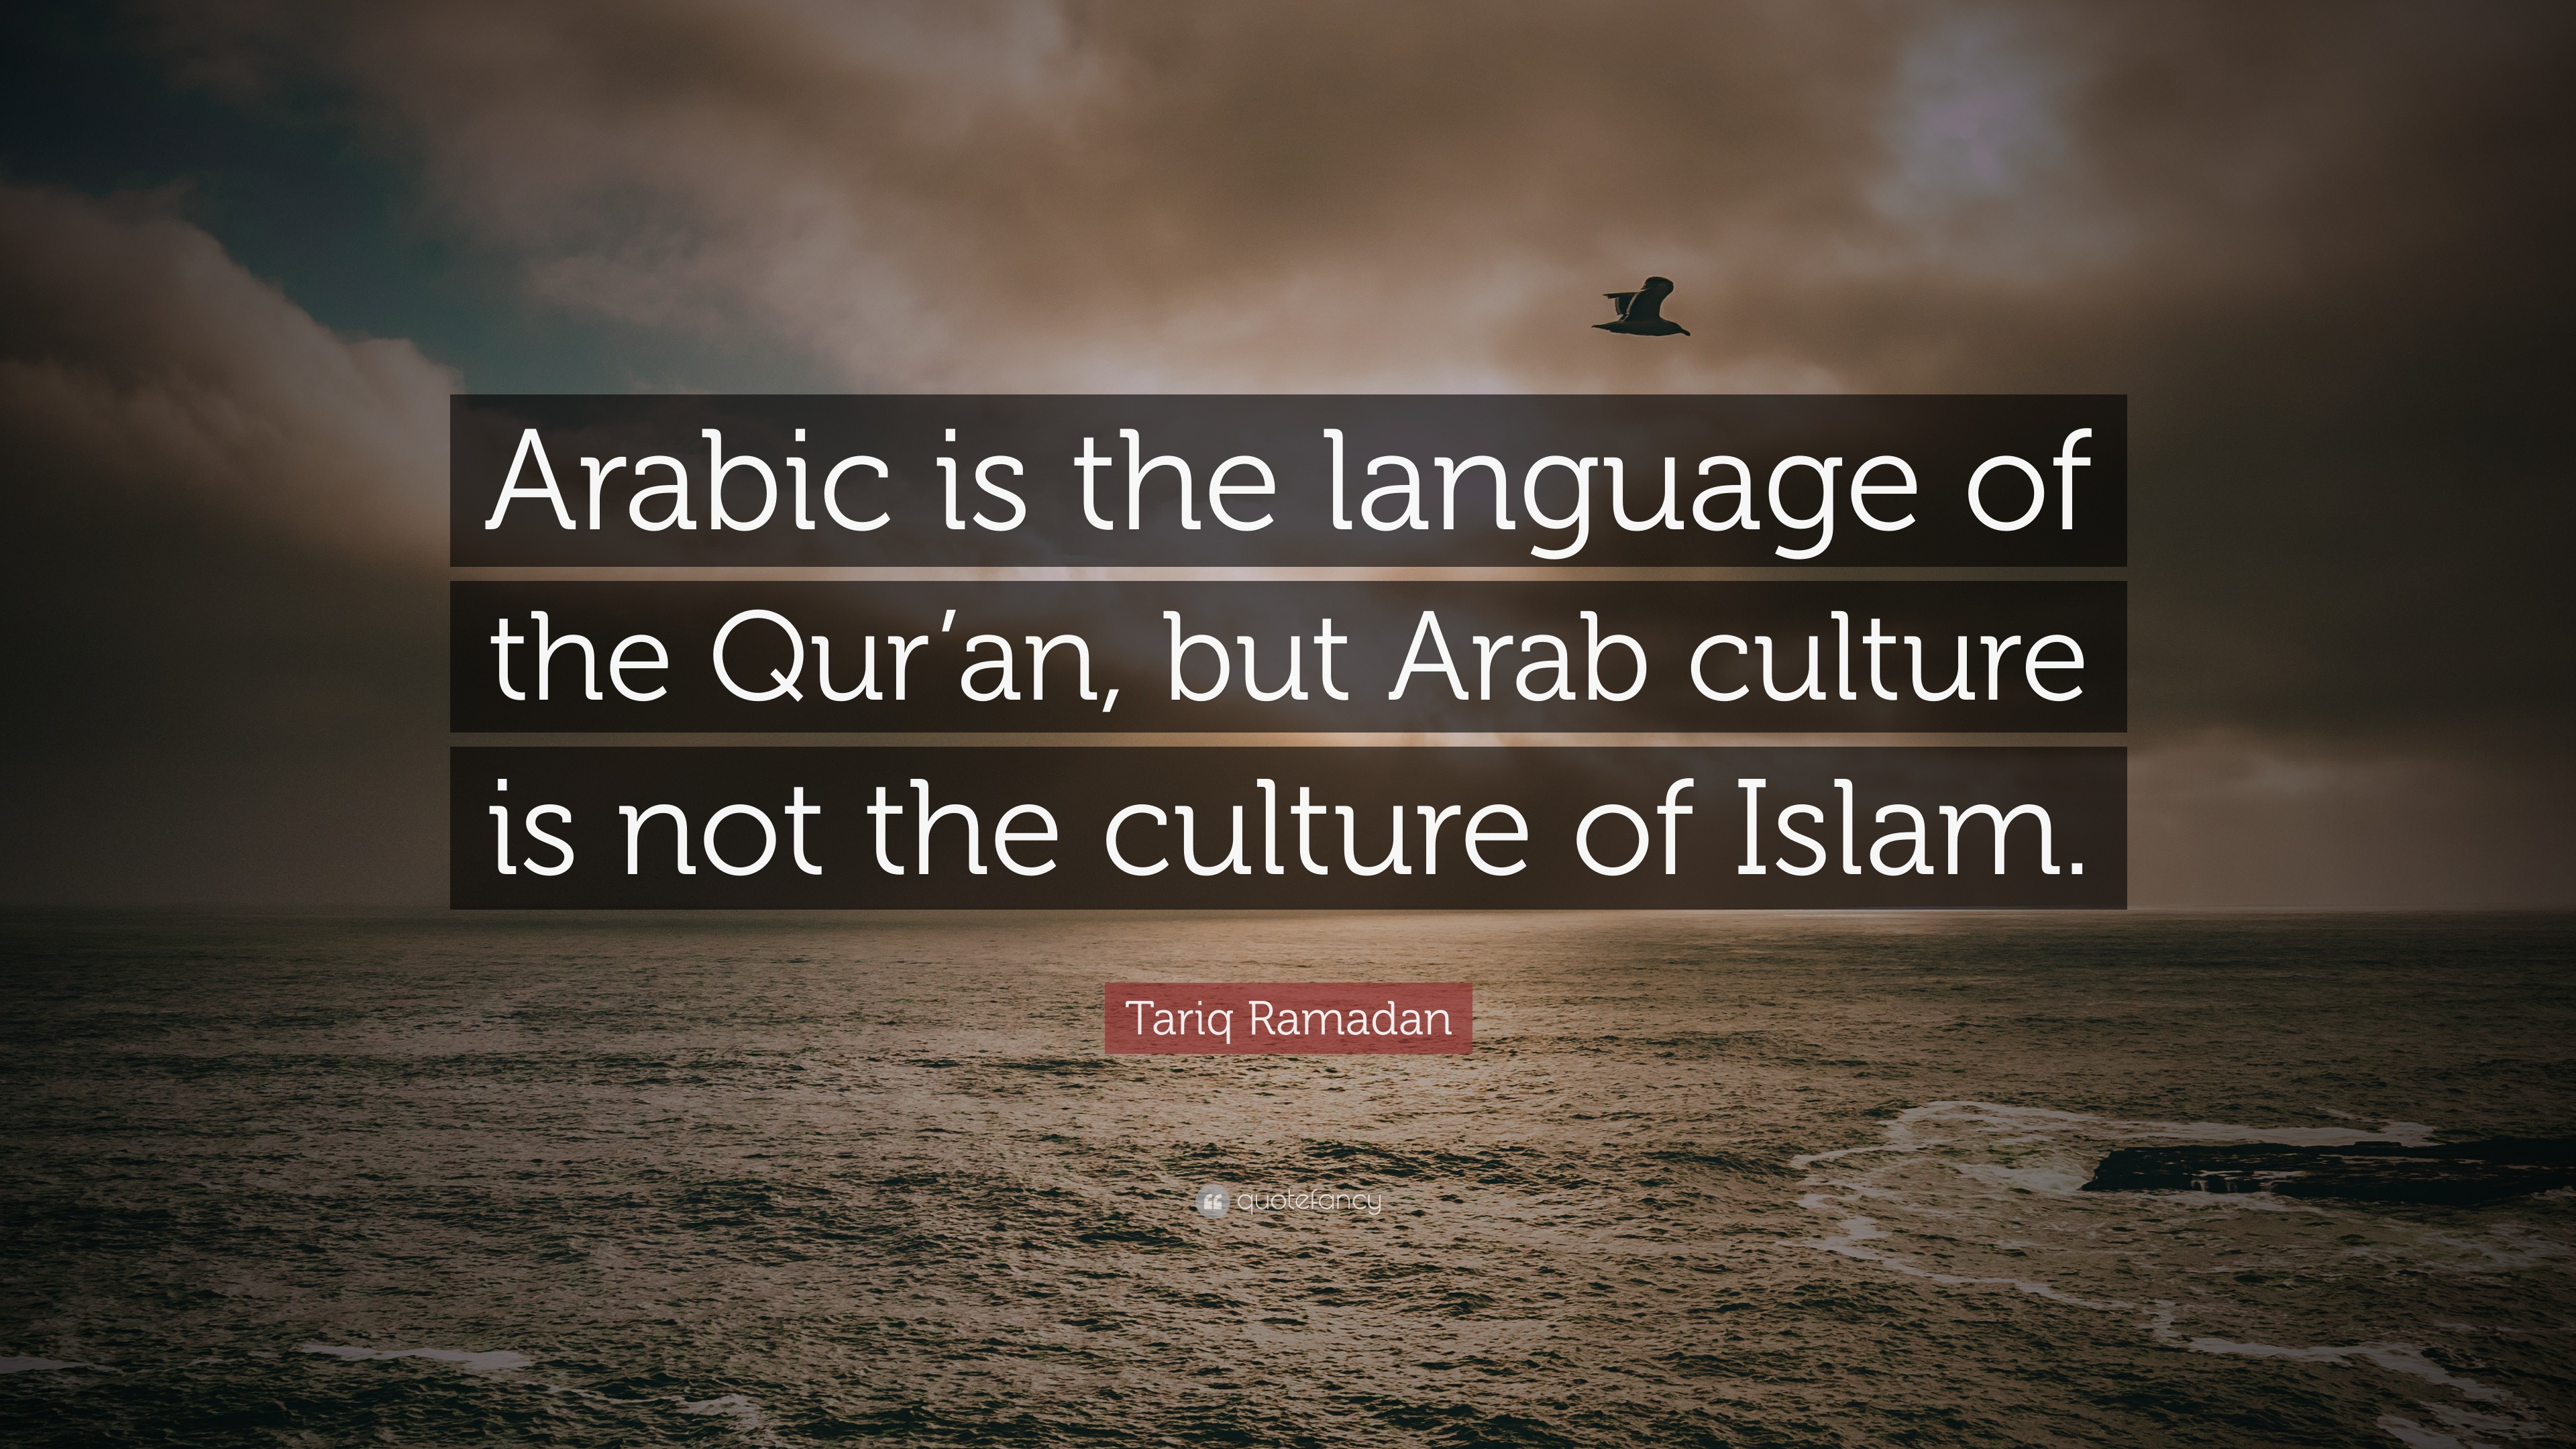 Tariq Ramadan Quote: “Arabic is the language of the Qur’an, but Arab